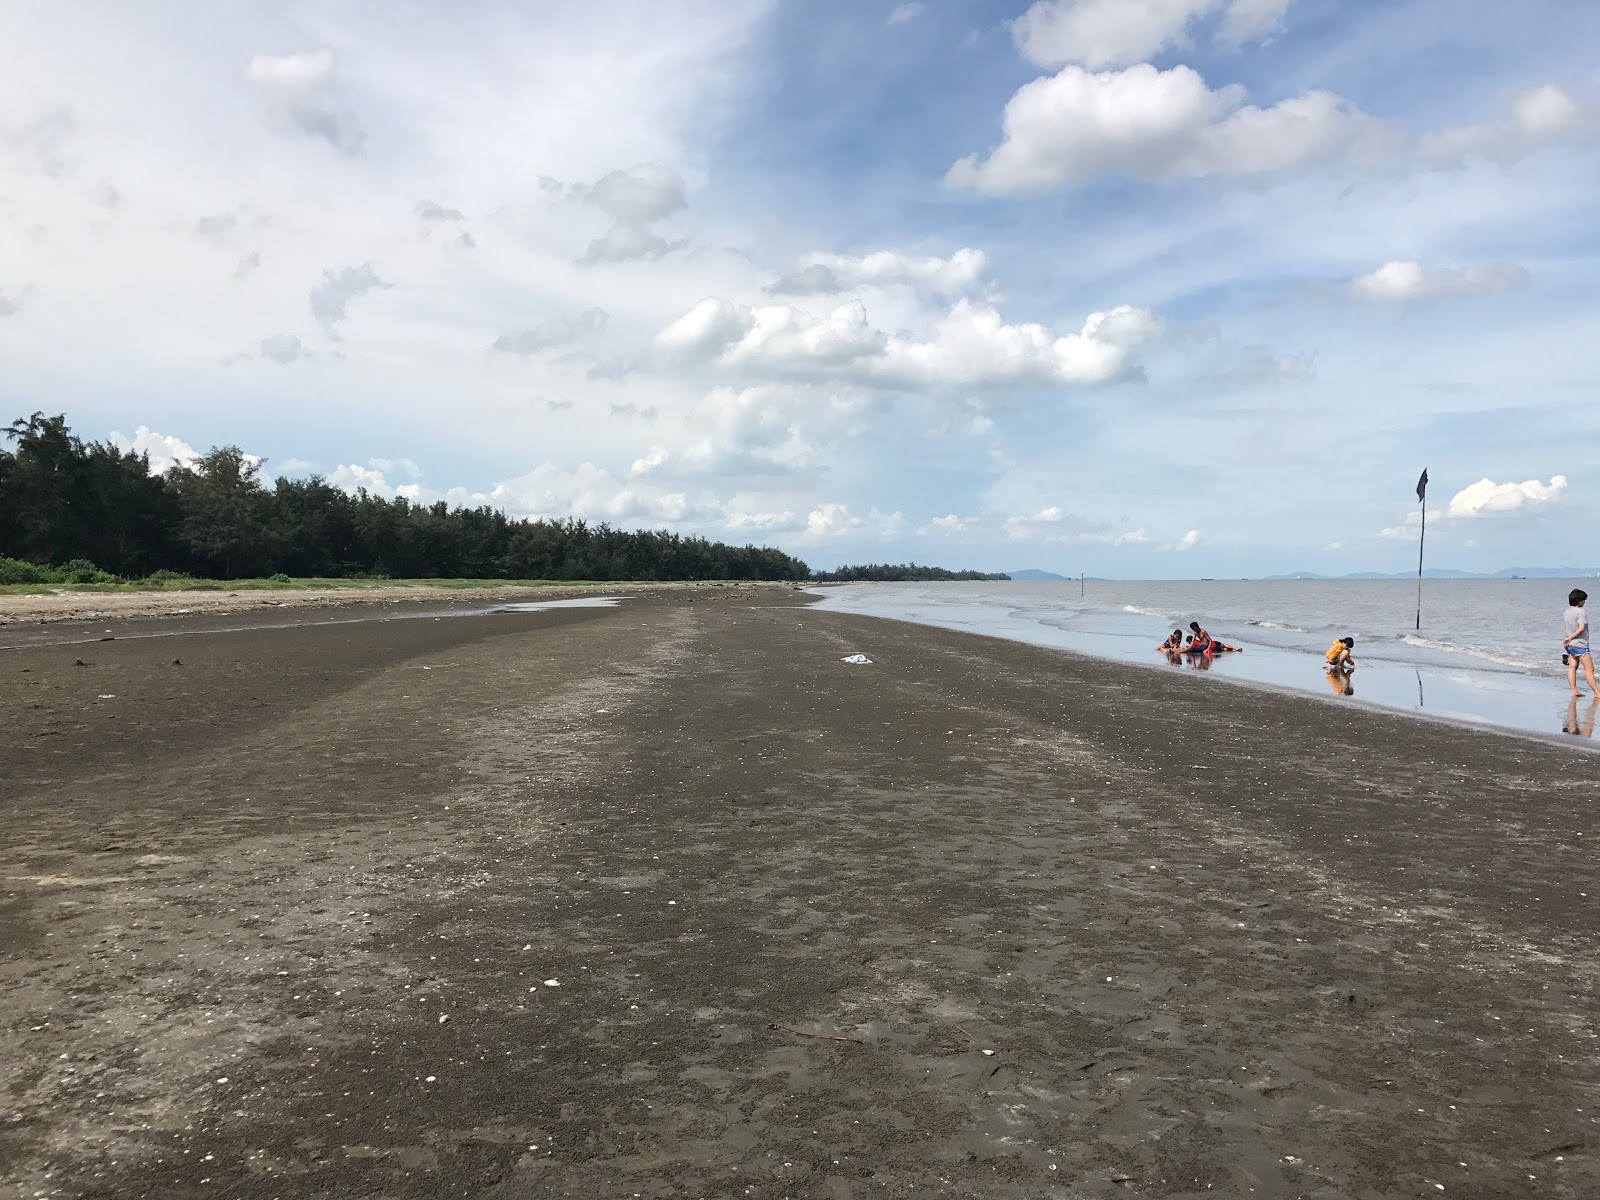 Fotografie cu Can Gio Beach cu nivelul de curățenie in medie